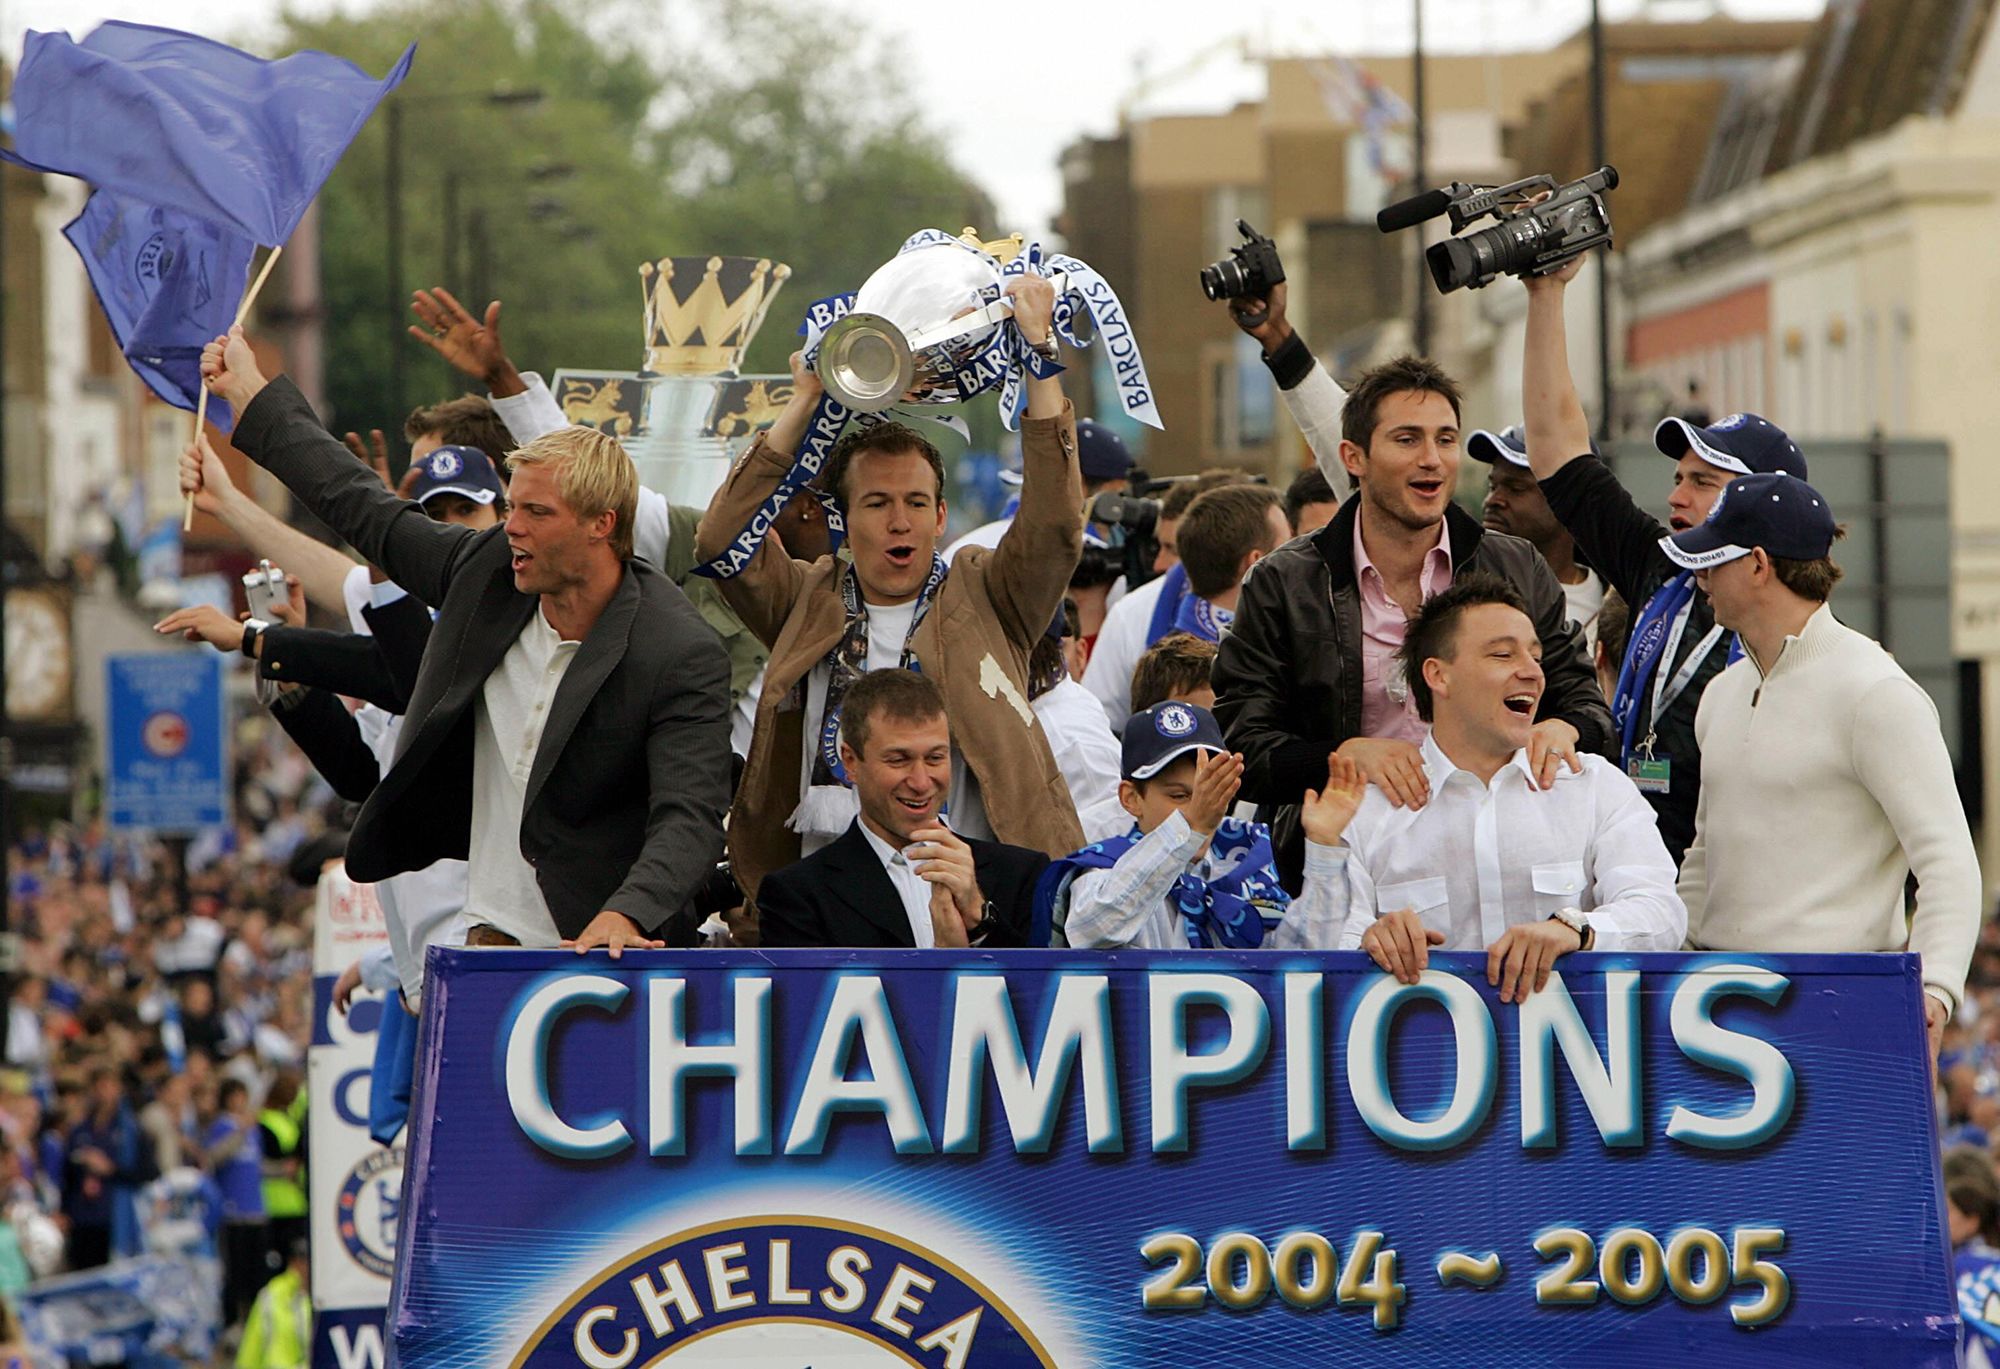 UK halts Chelsea sale after Abramovich sanctions